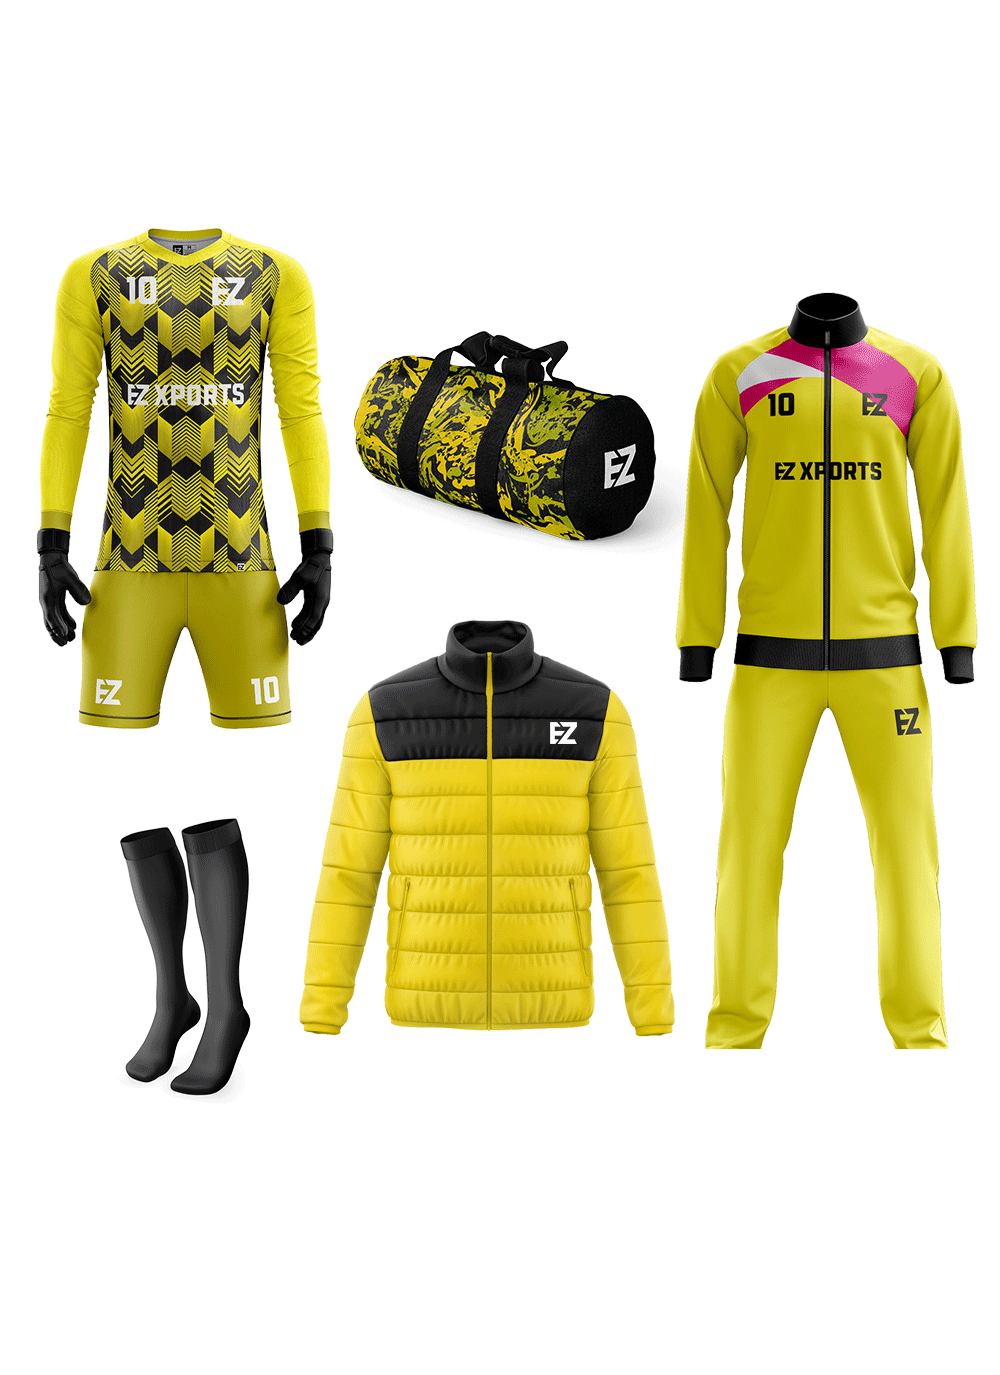 Goalkeeper Uniform Packages